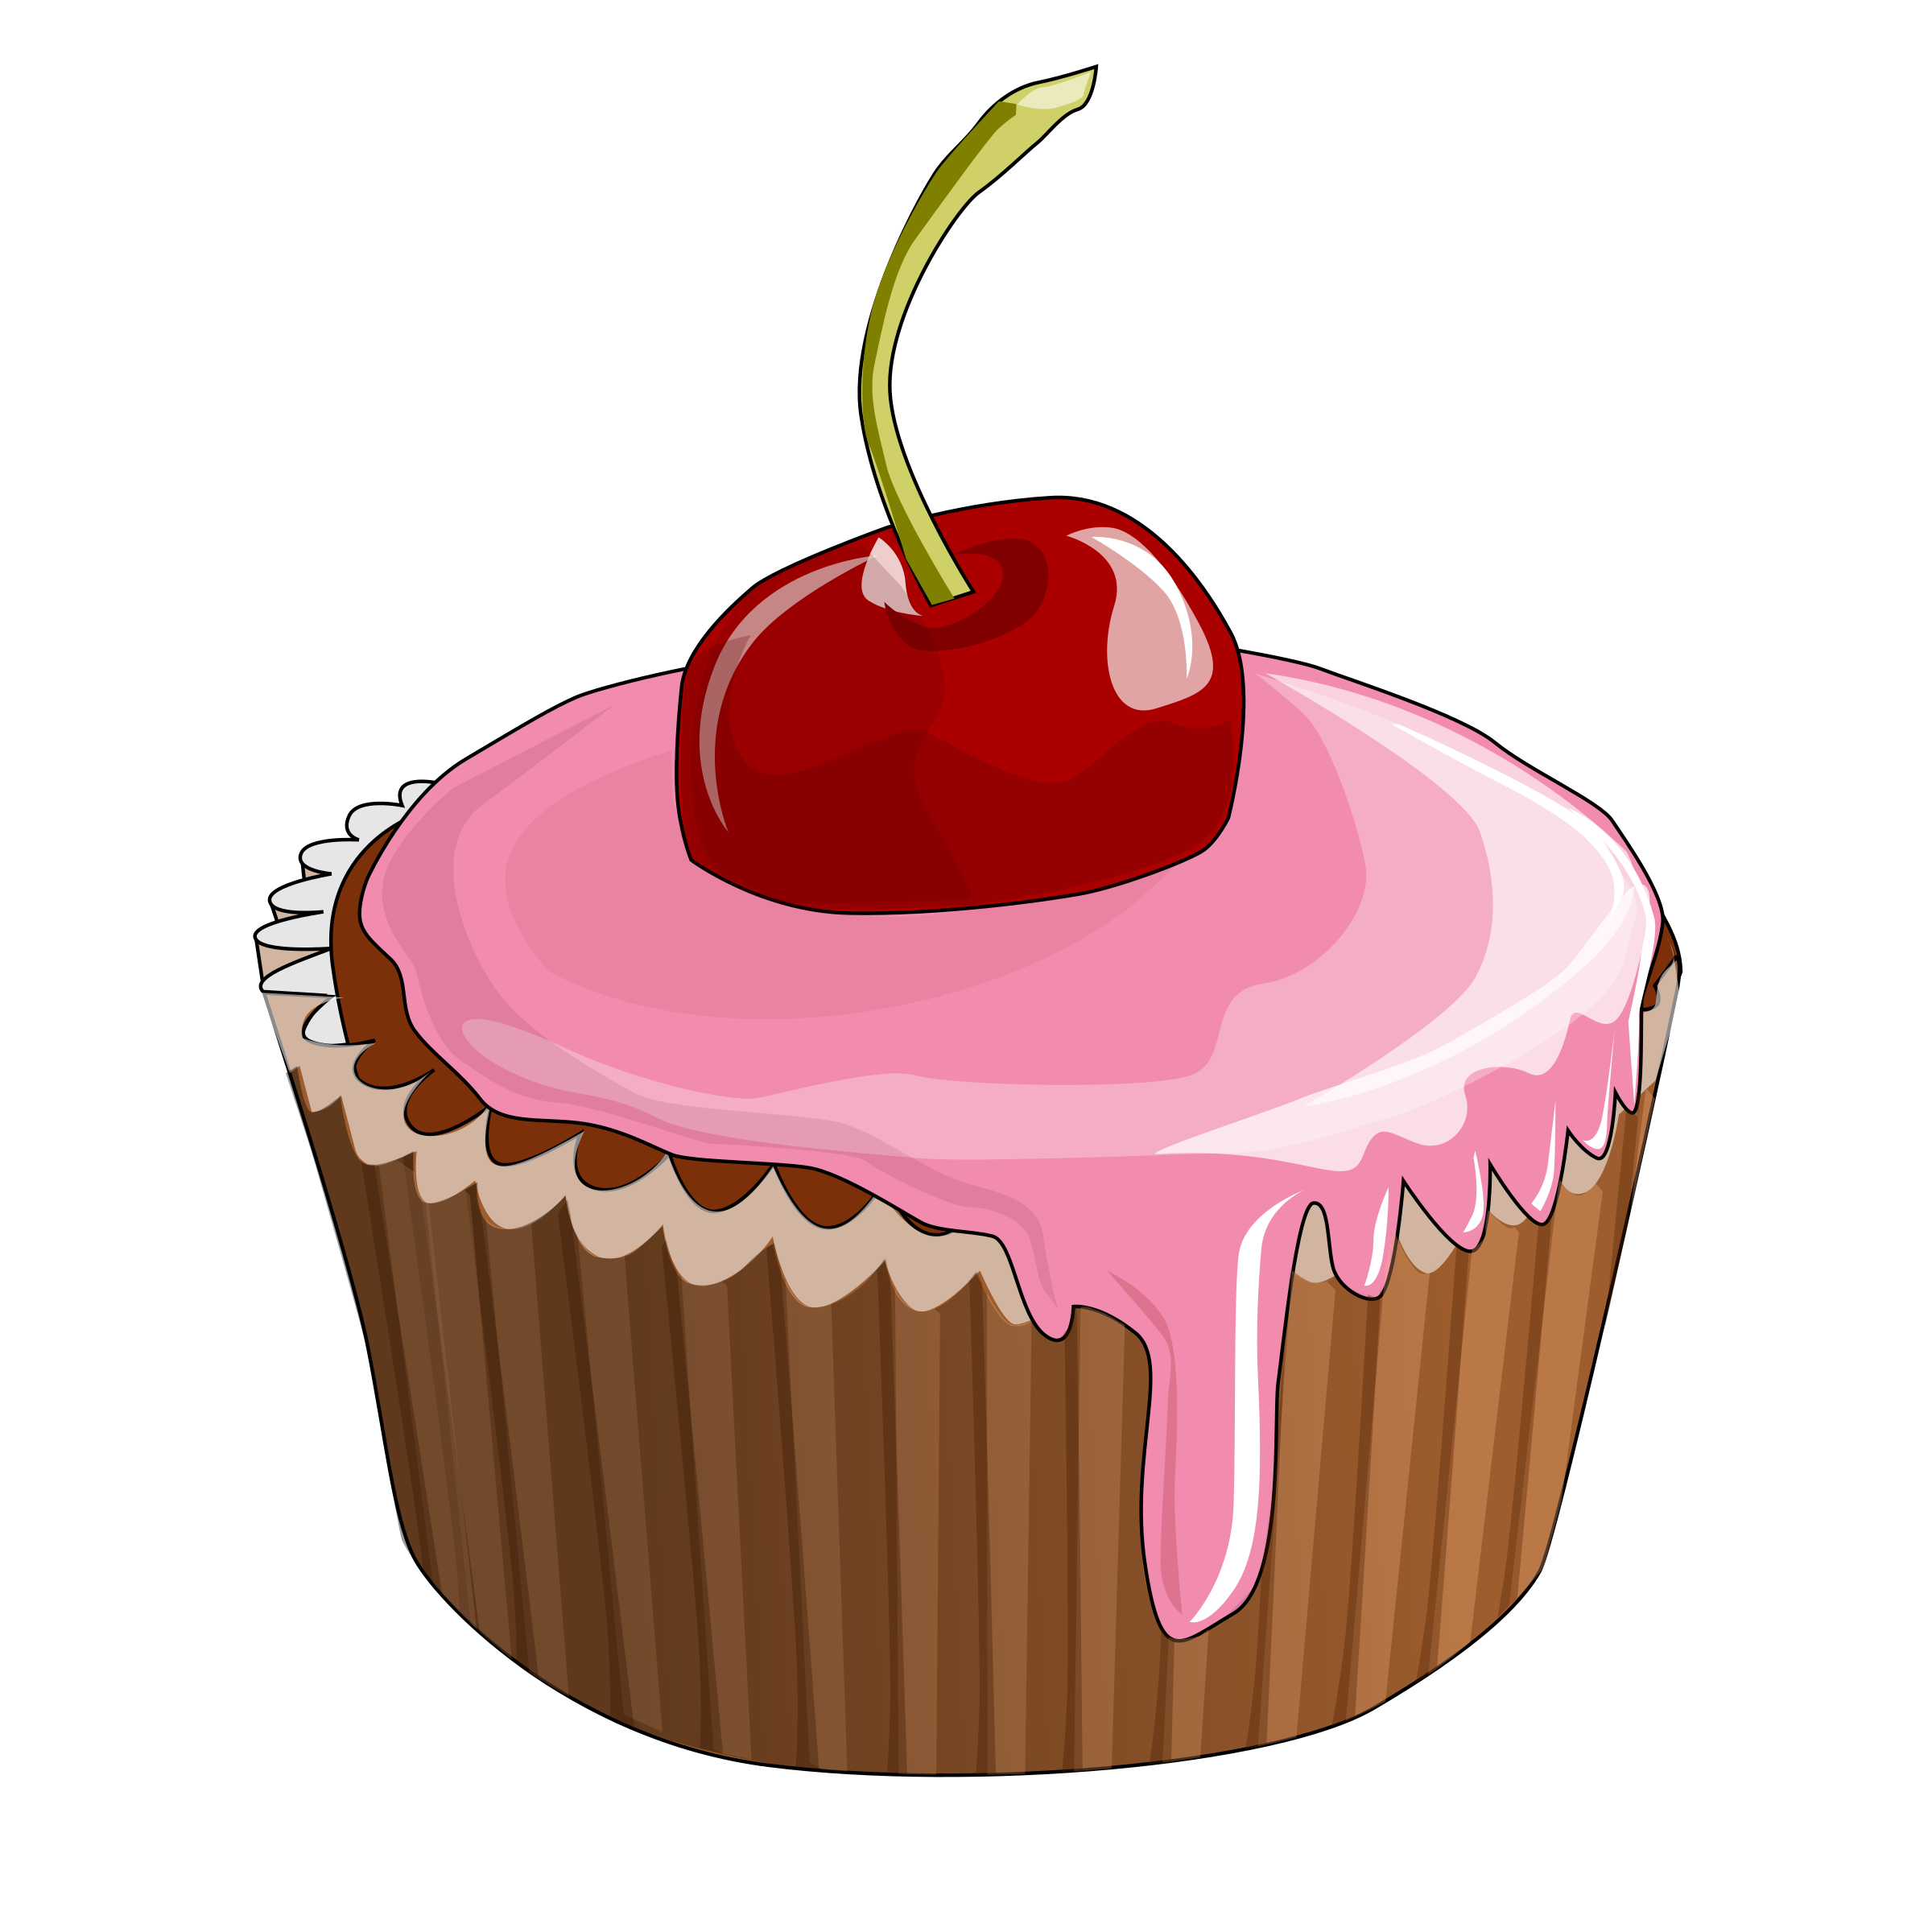 Cherry cupcake big image. Cupcakes clipart baking